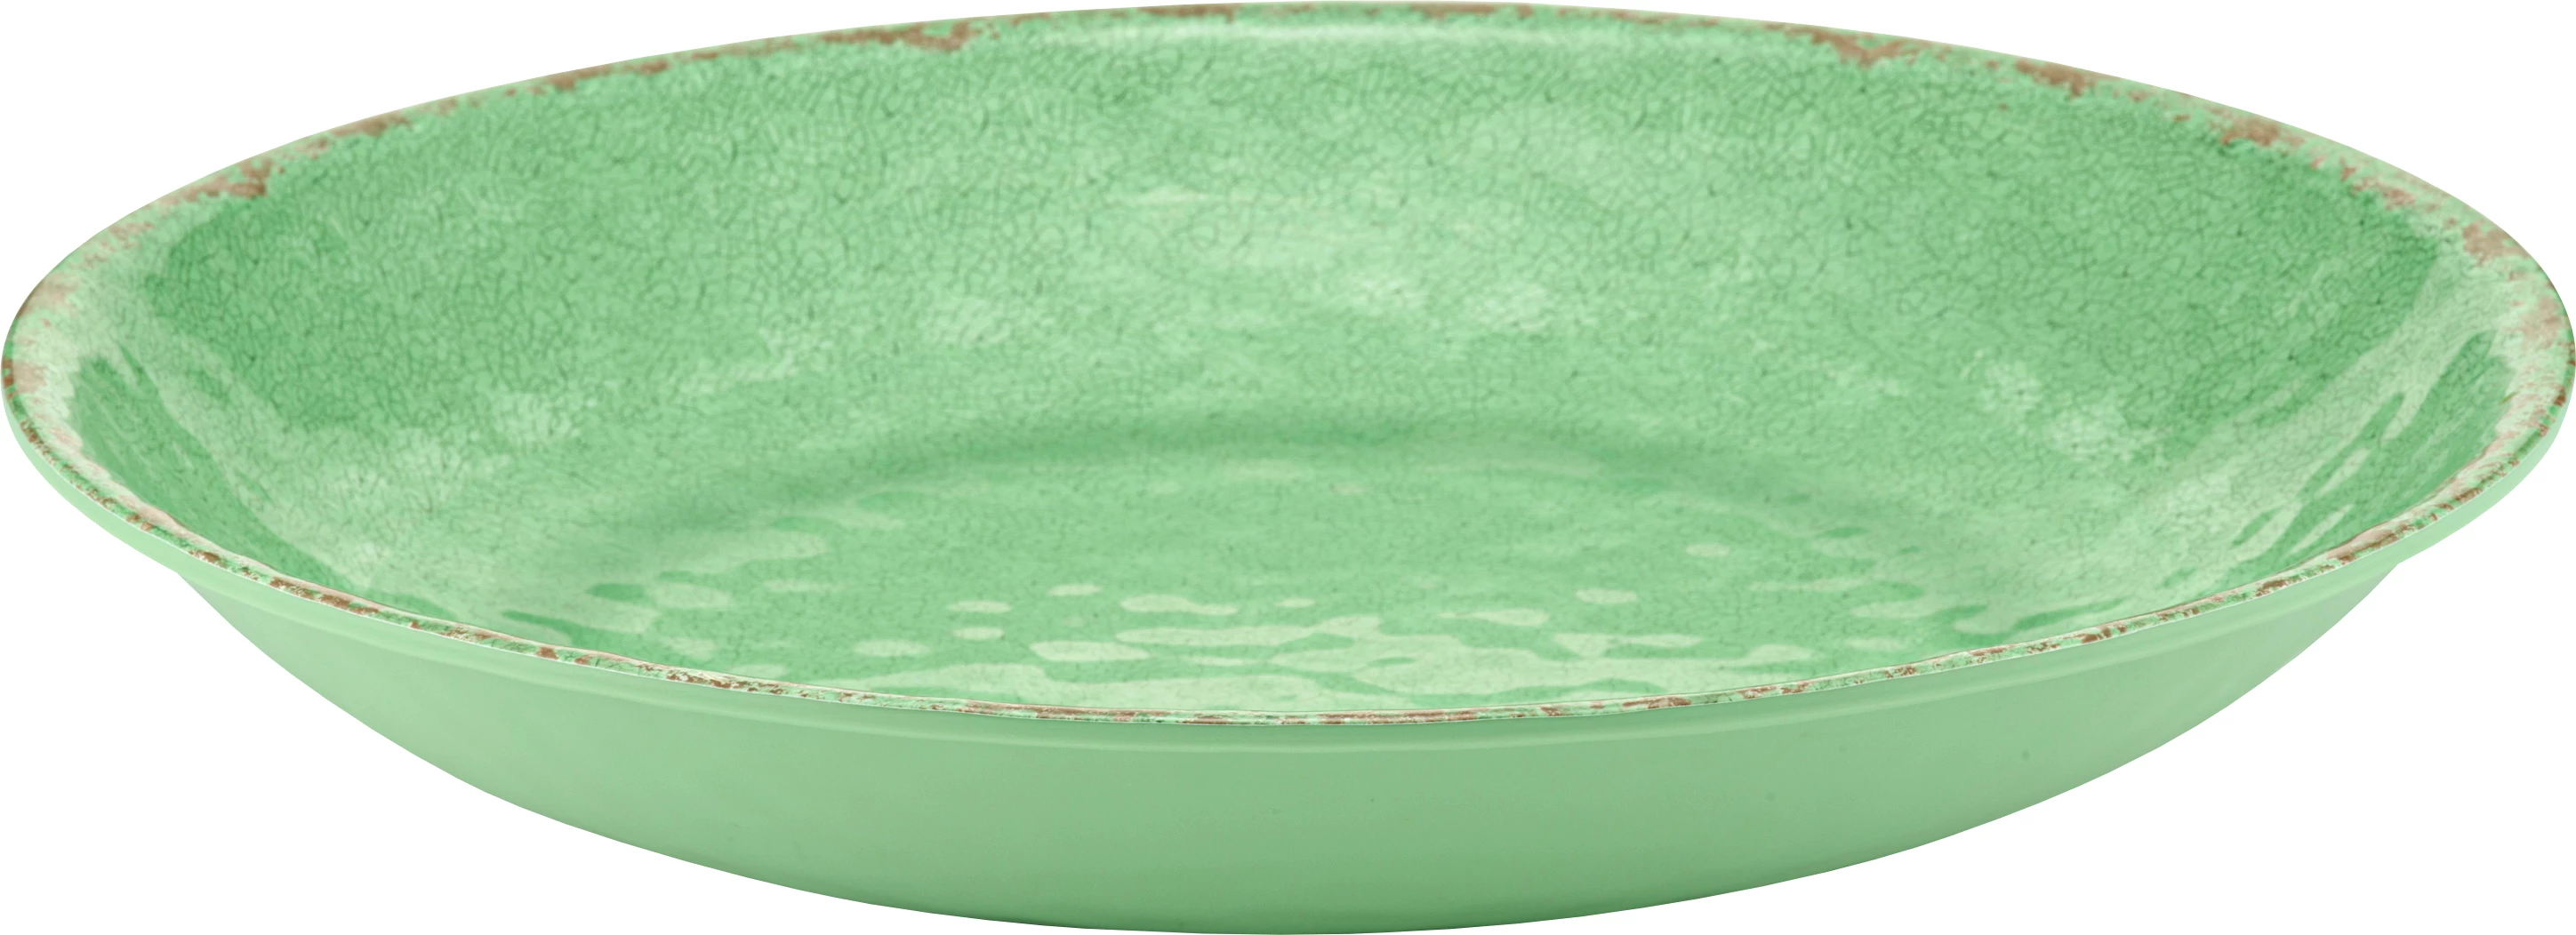 Dalebrook Casablanca skål, grøn, 600 cl, ø42 cm